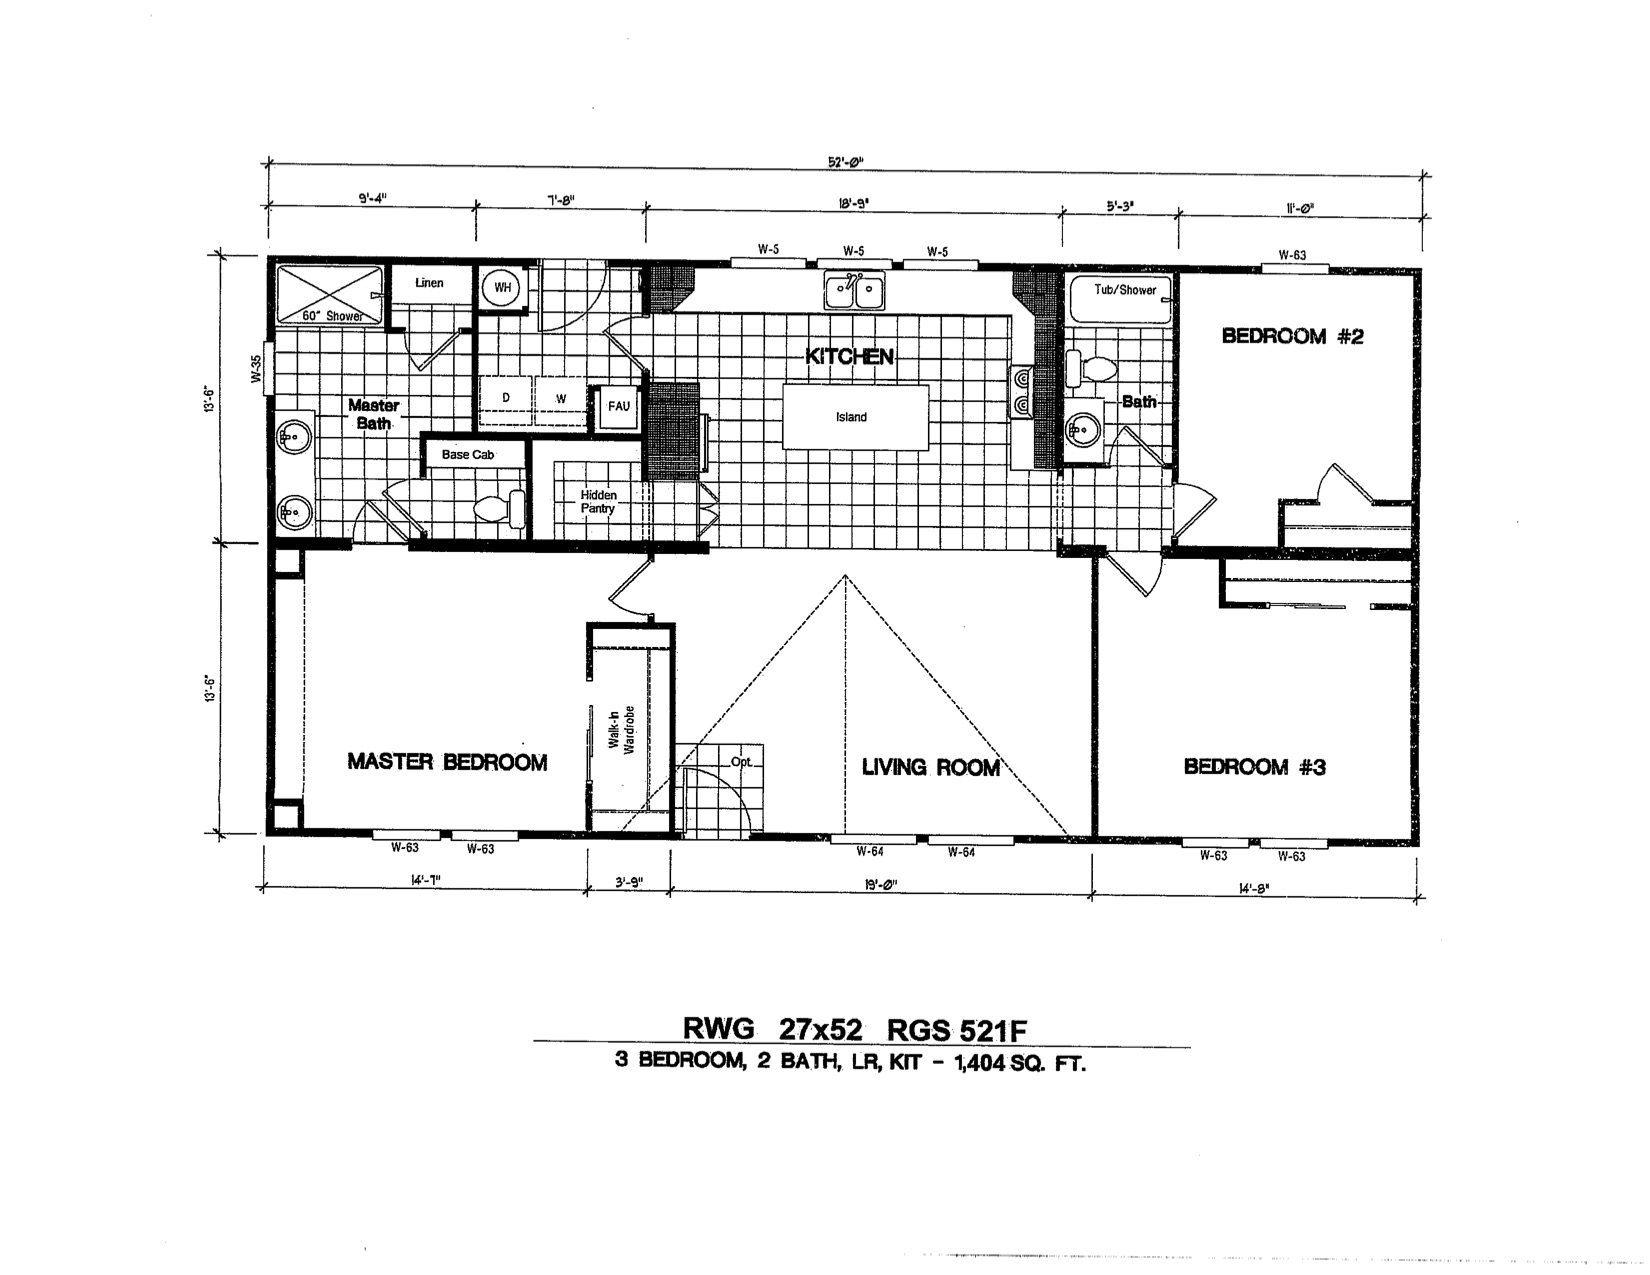 Homes Direct Modular Homes - Model RGS521F - Floorplan